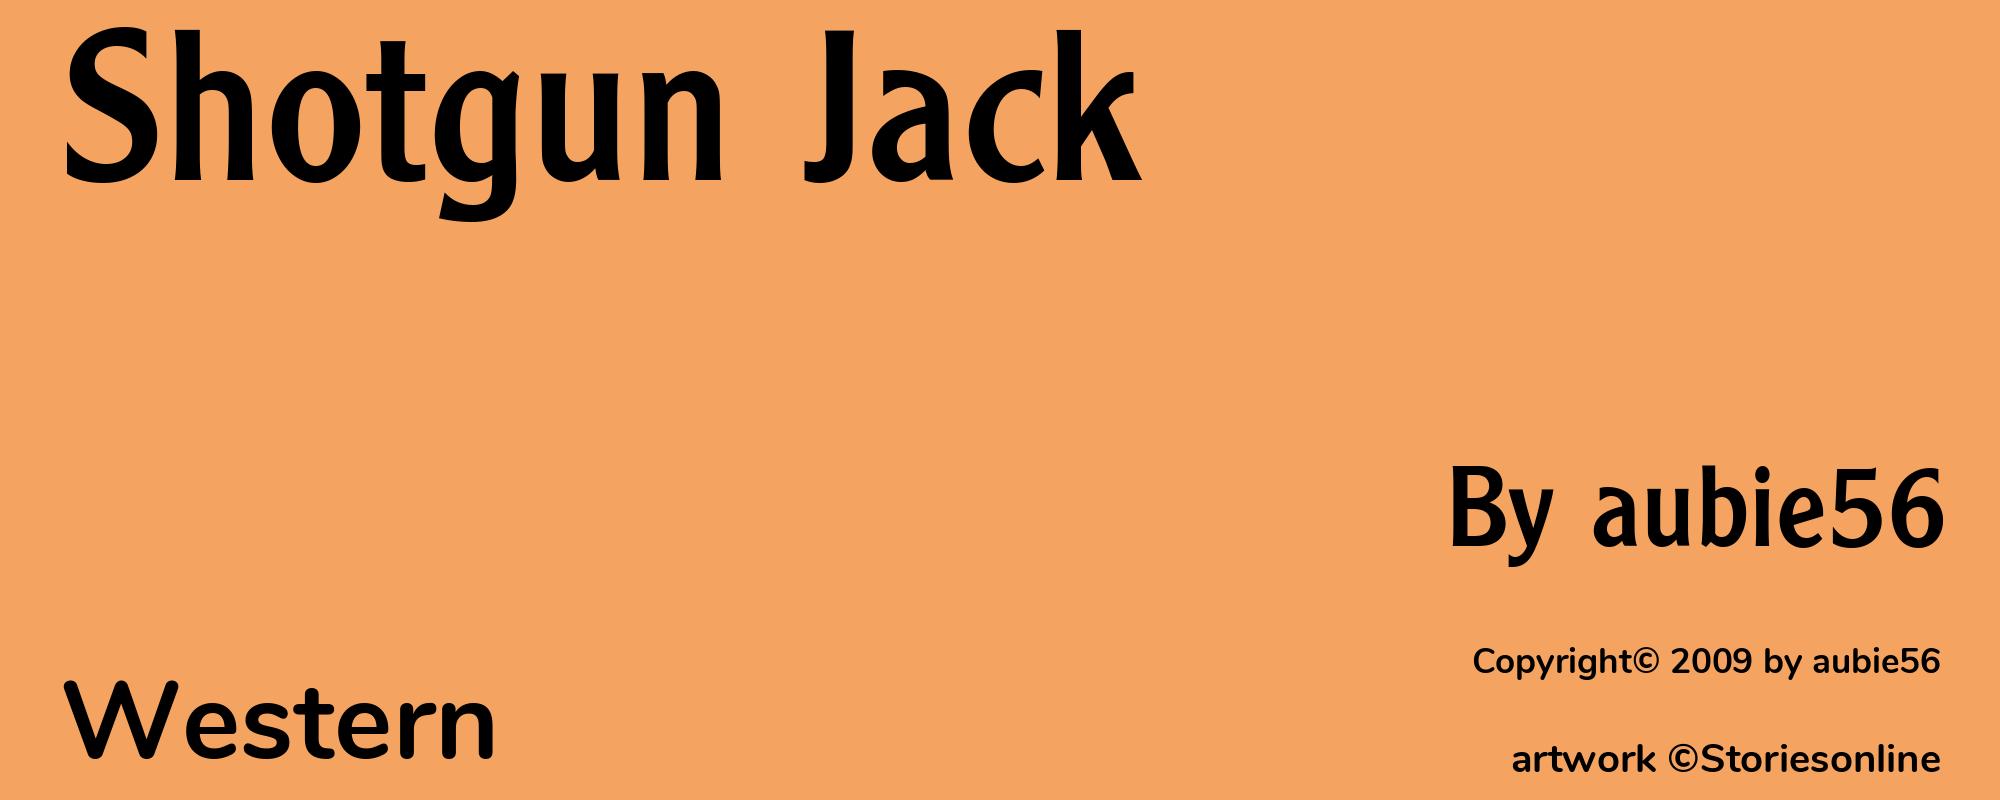 Shotgun Jack - Cover